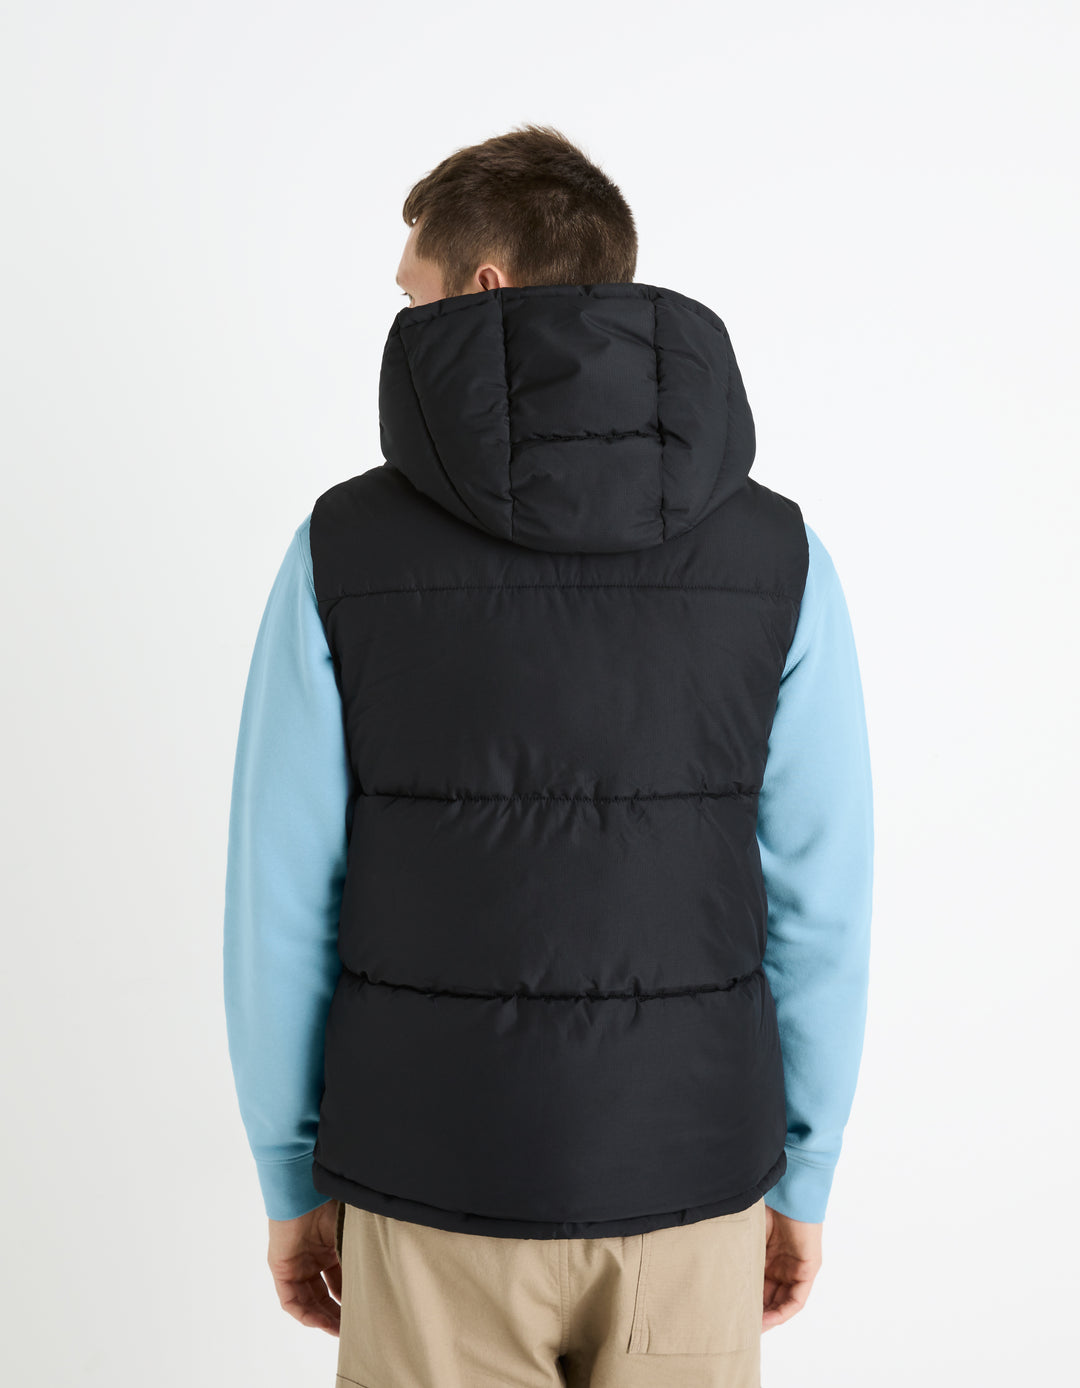 Unisex - Woven - Jacket - no sleeves